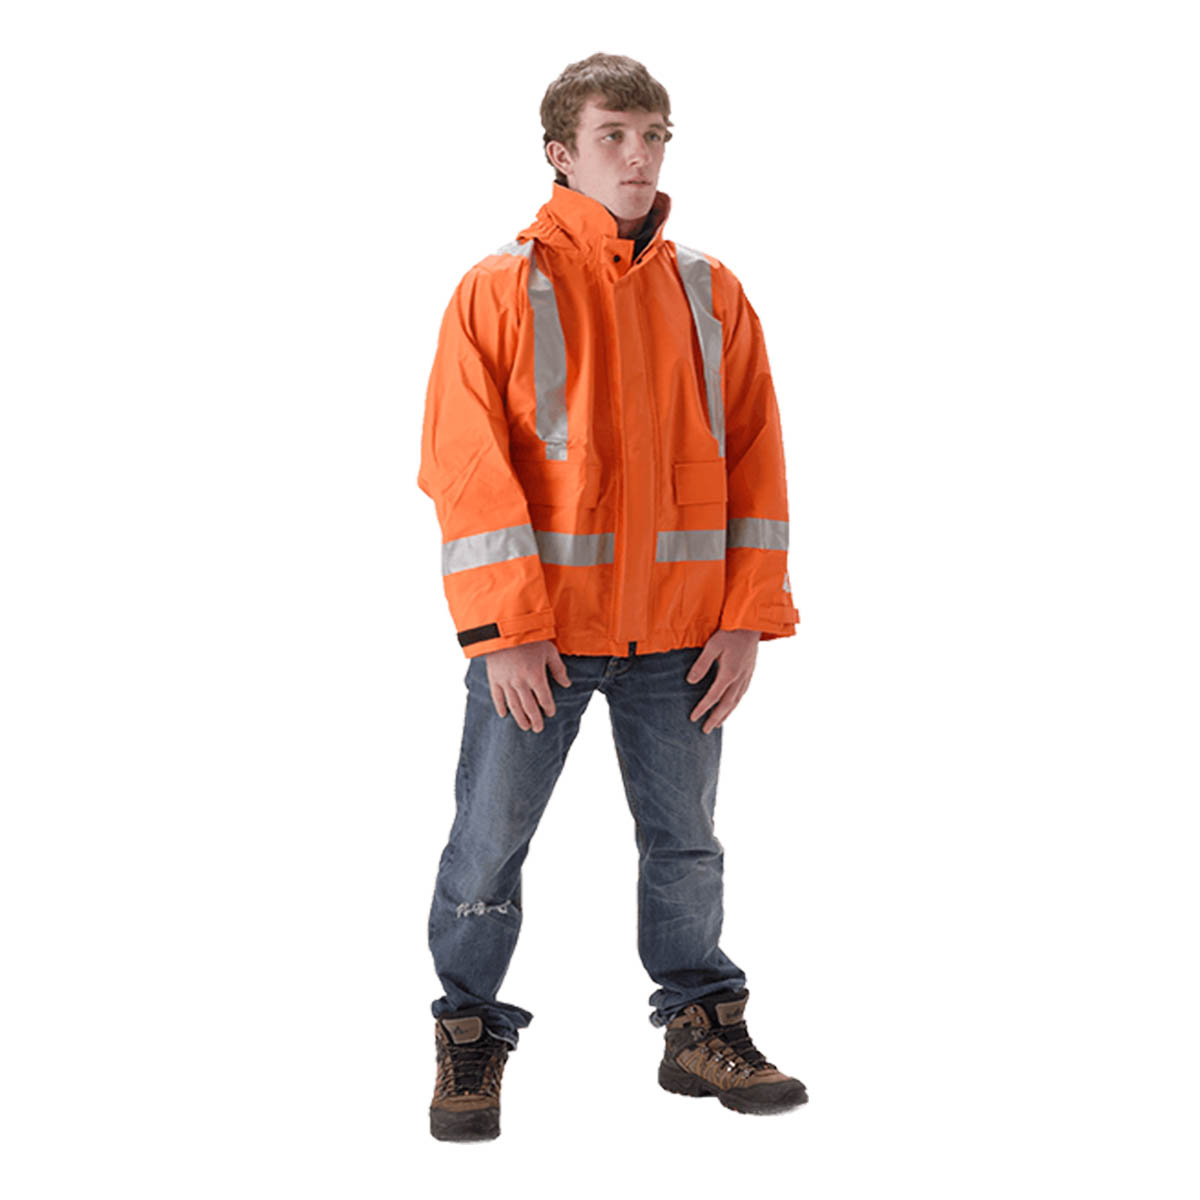 PetroLite 9000 Waist Length Rain Jacket in Orange